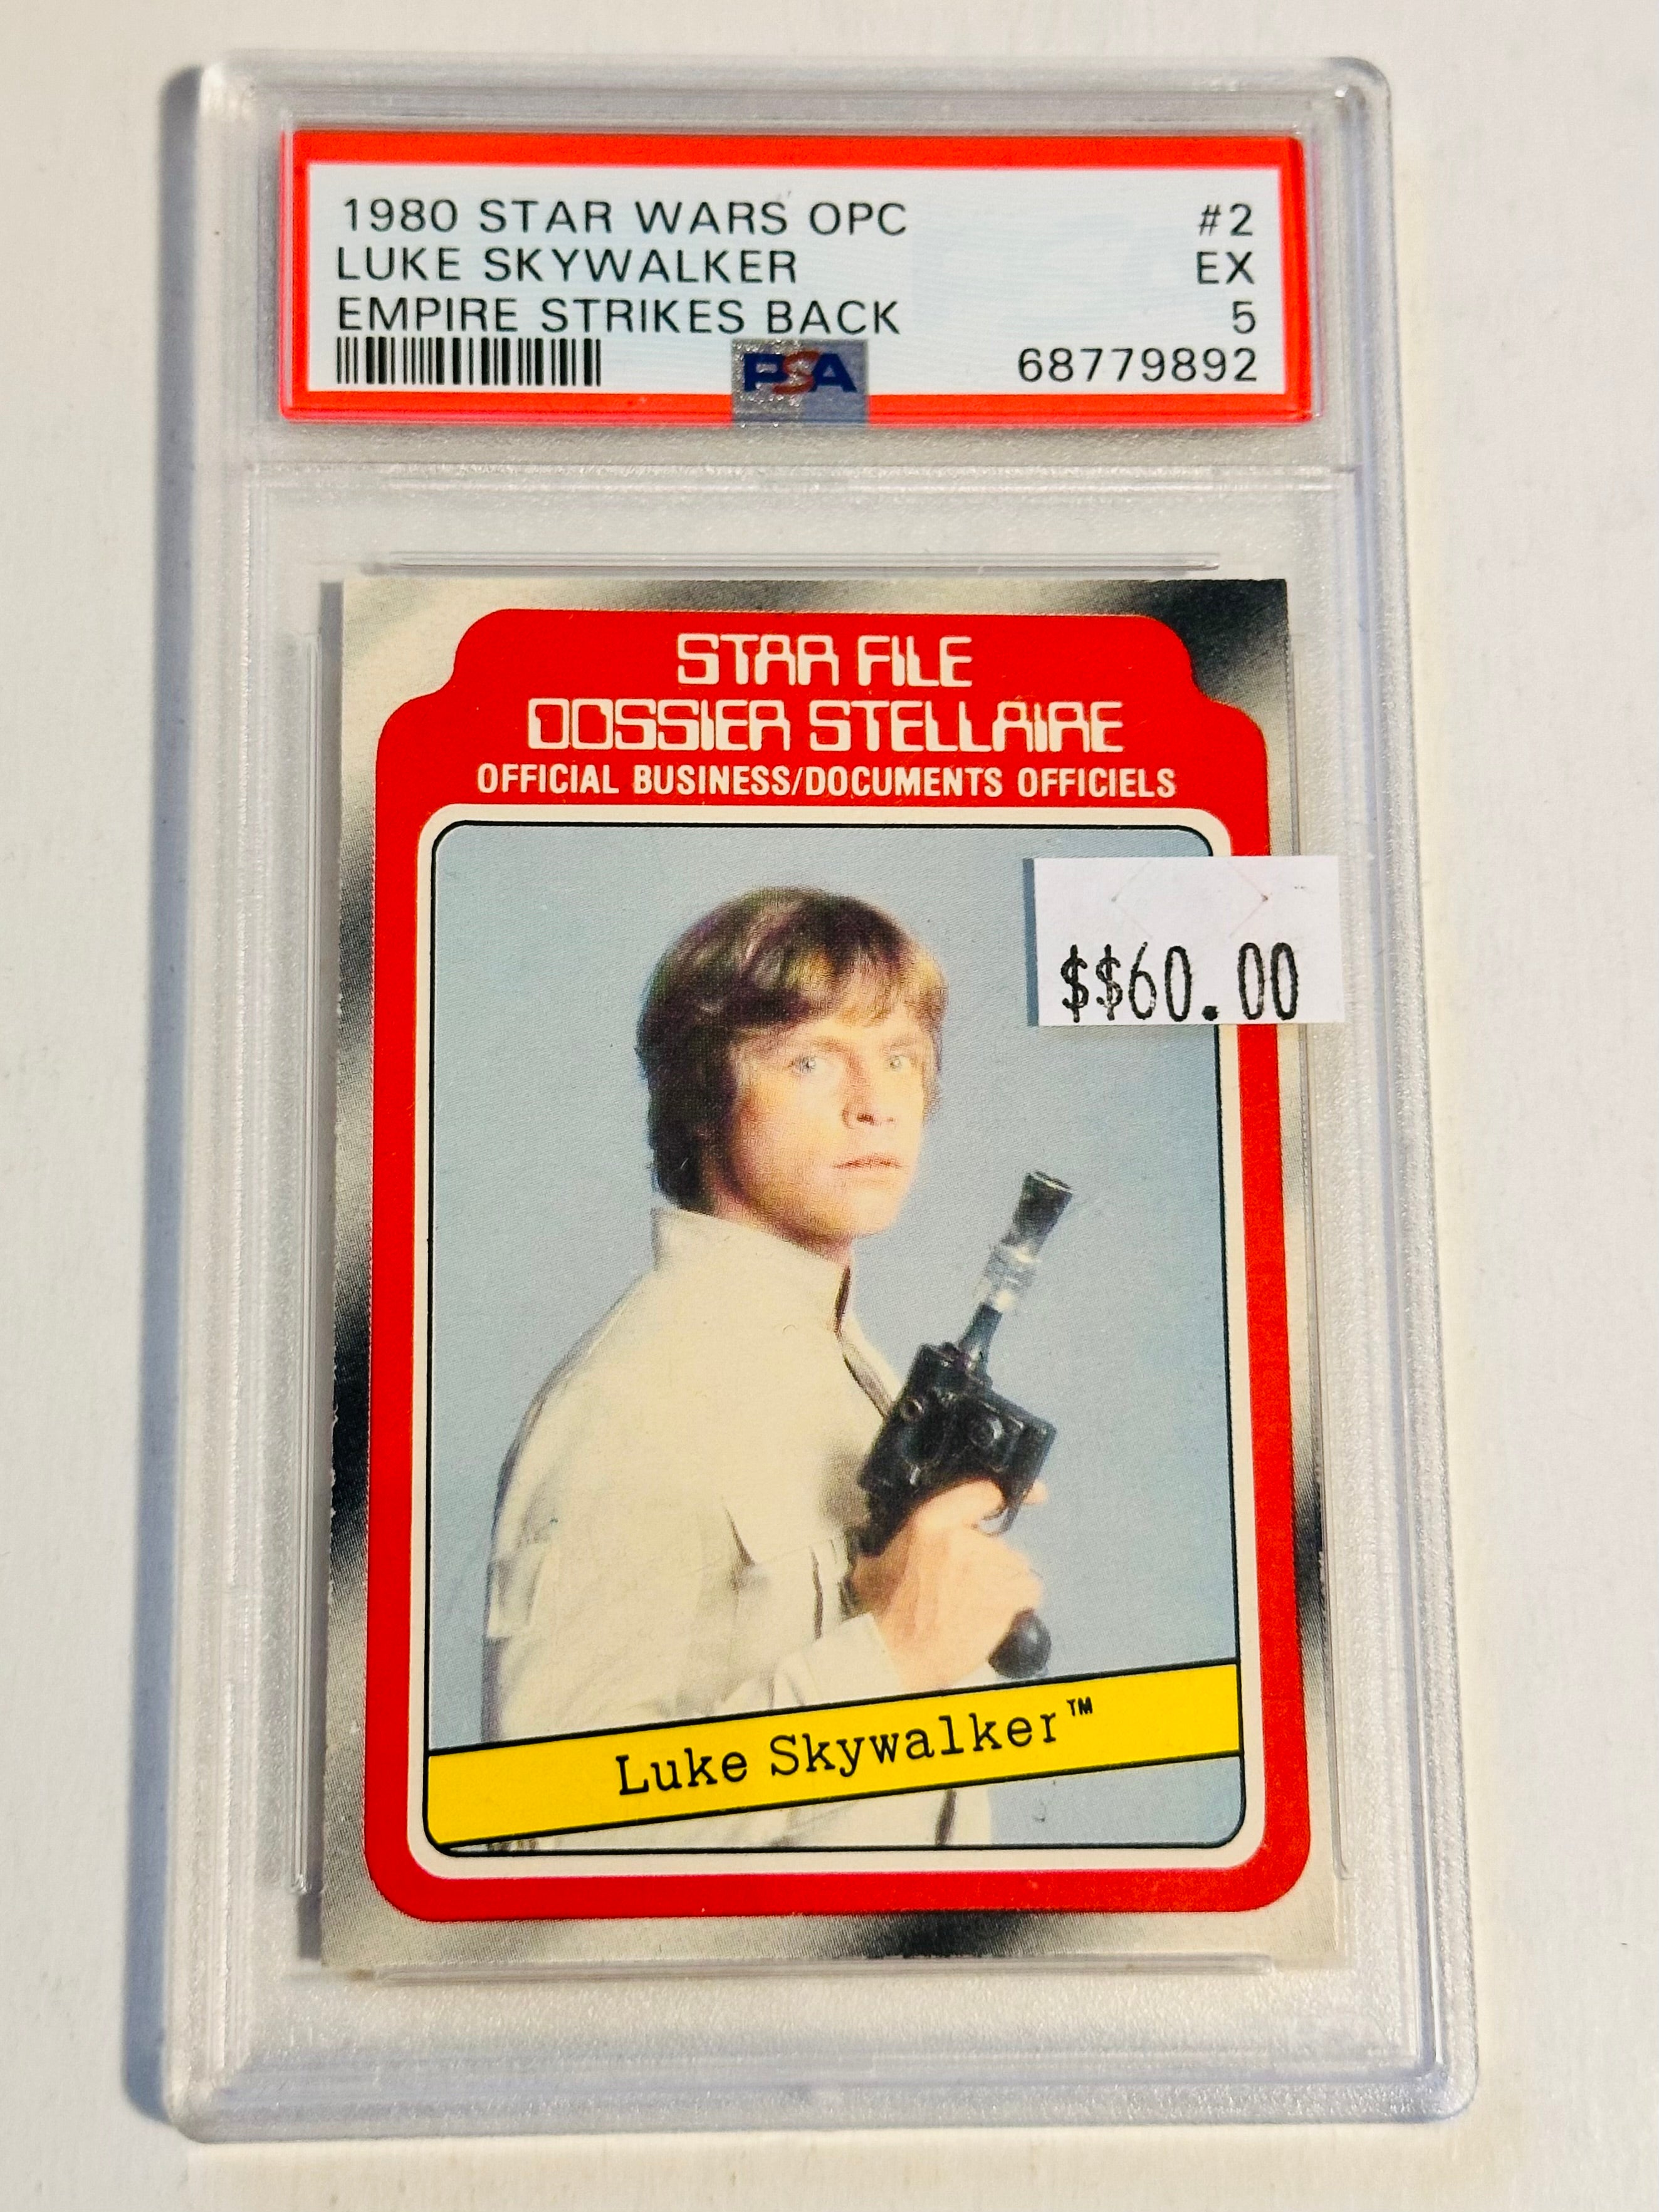 Star Wars Luke Skywalker Opc rarer Canadian version PSA graded card 1980